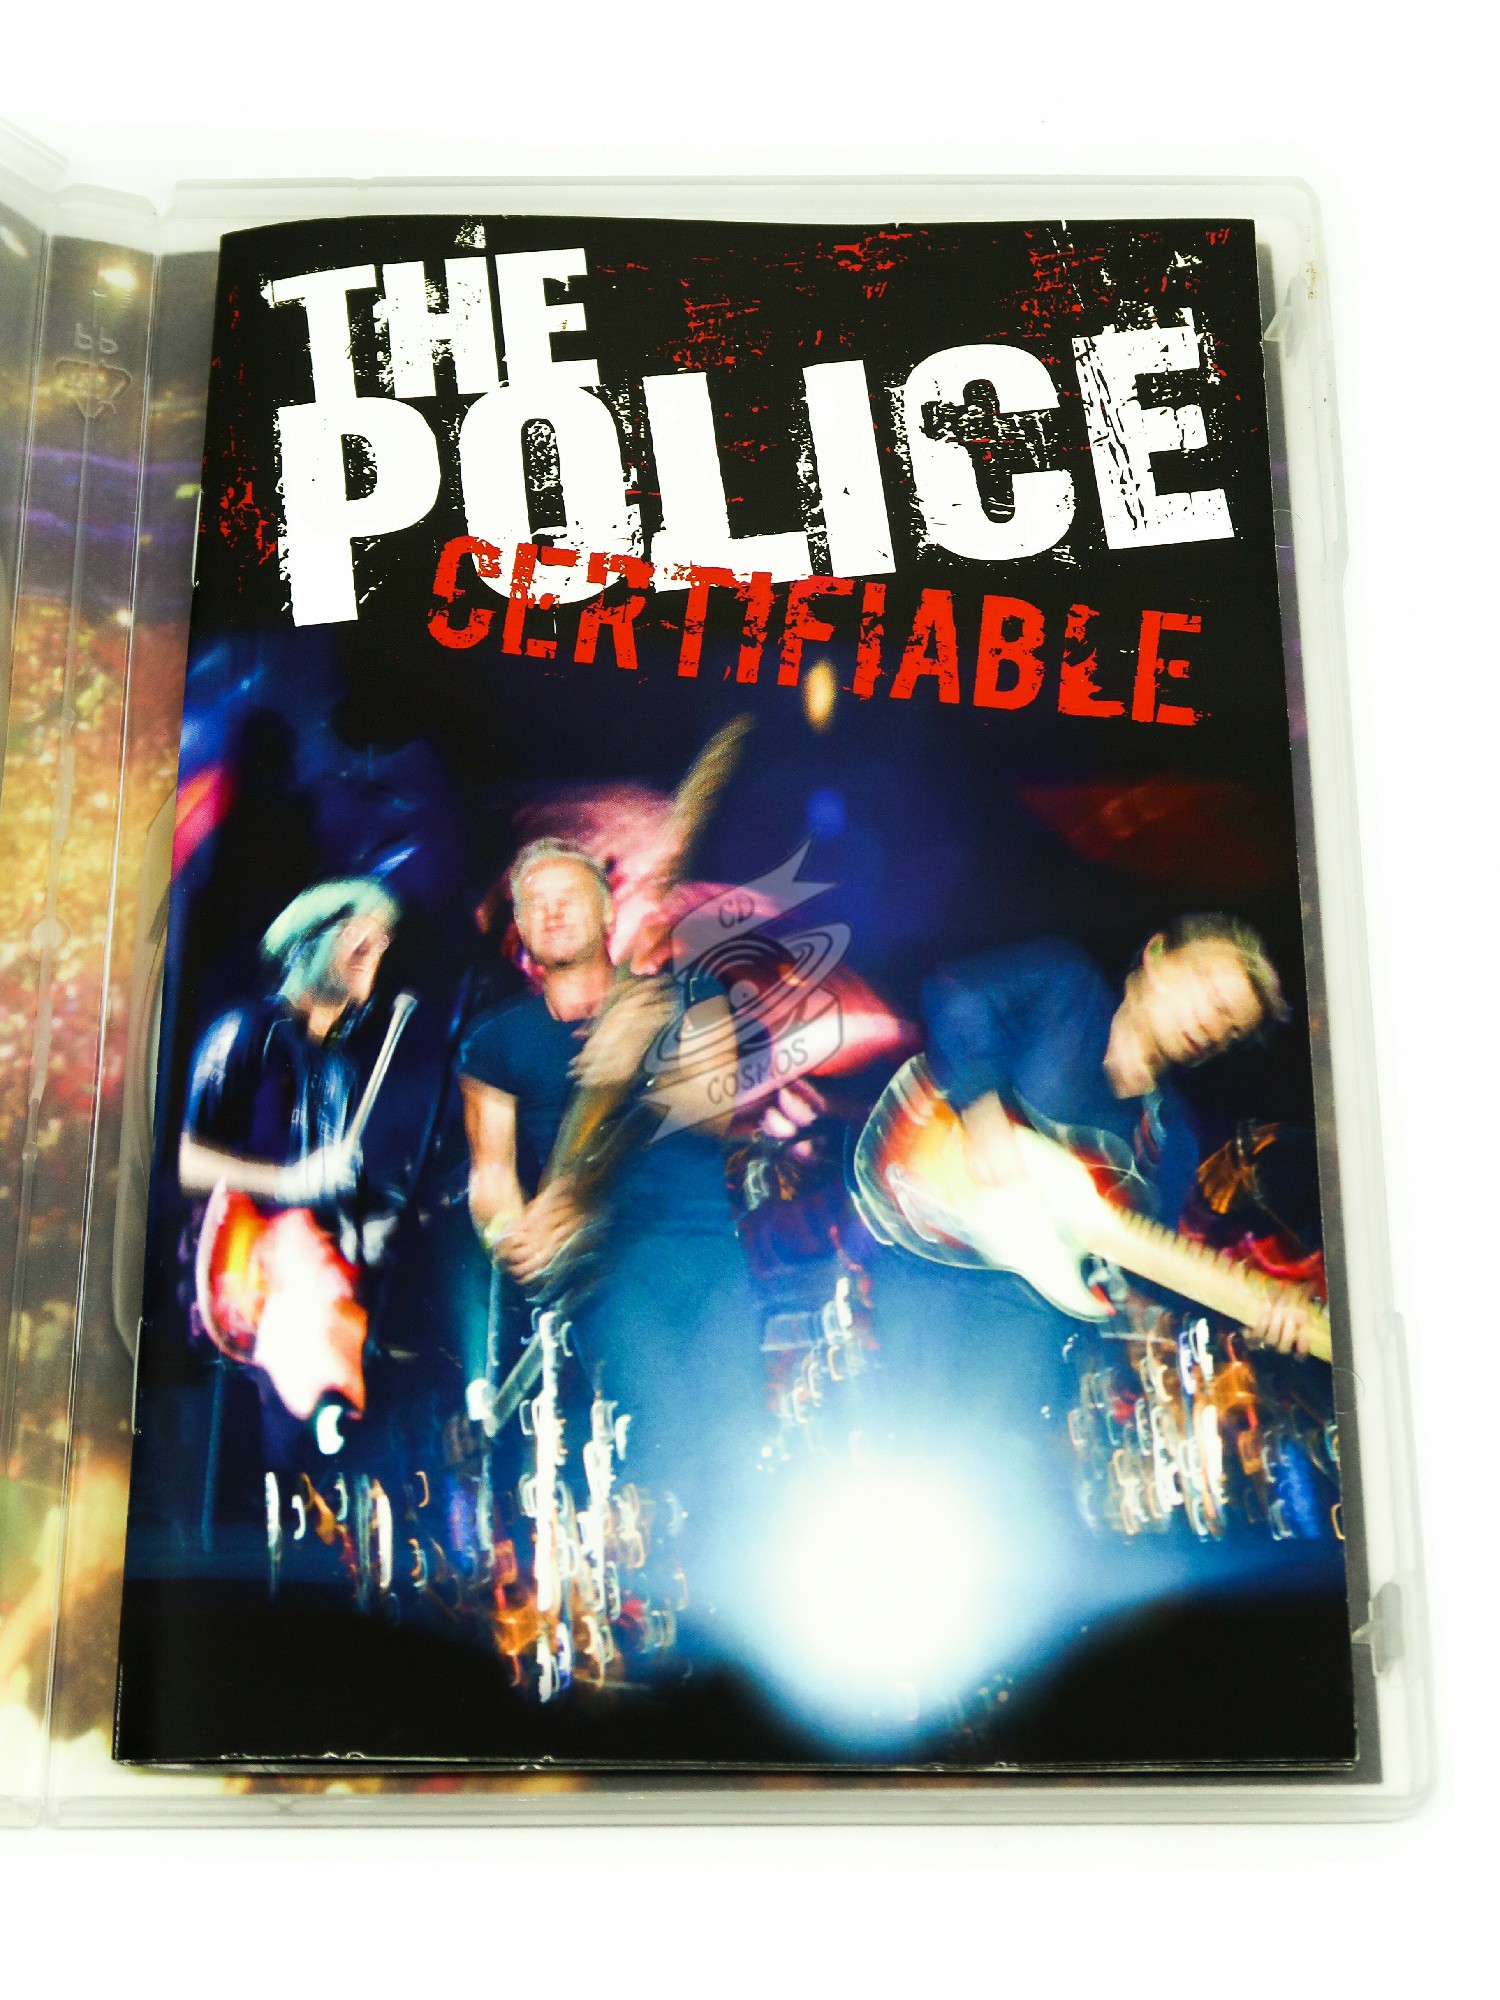 Certifiable [Vinyl] Police